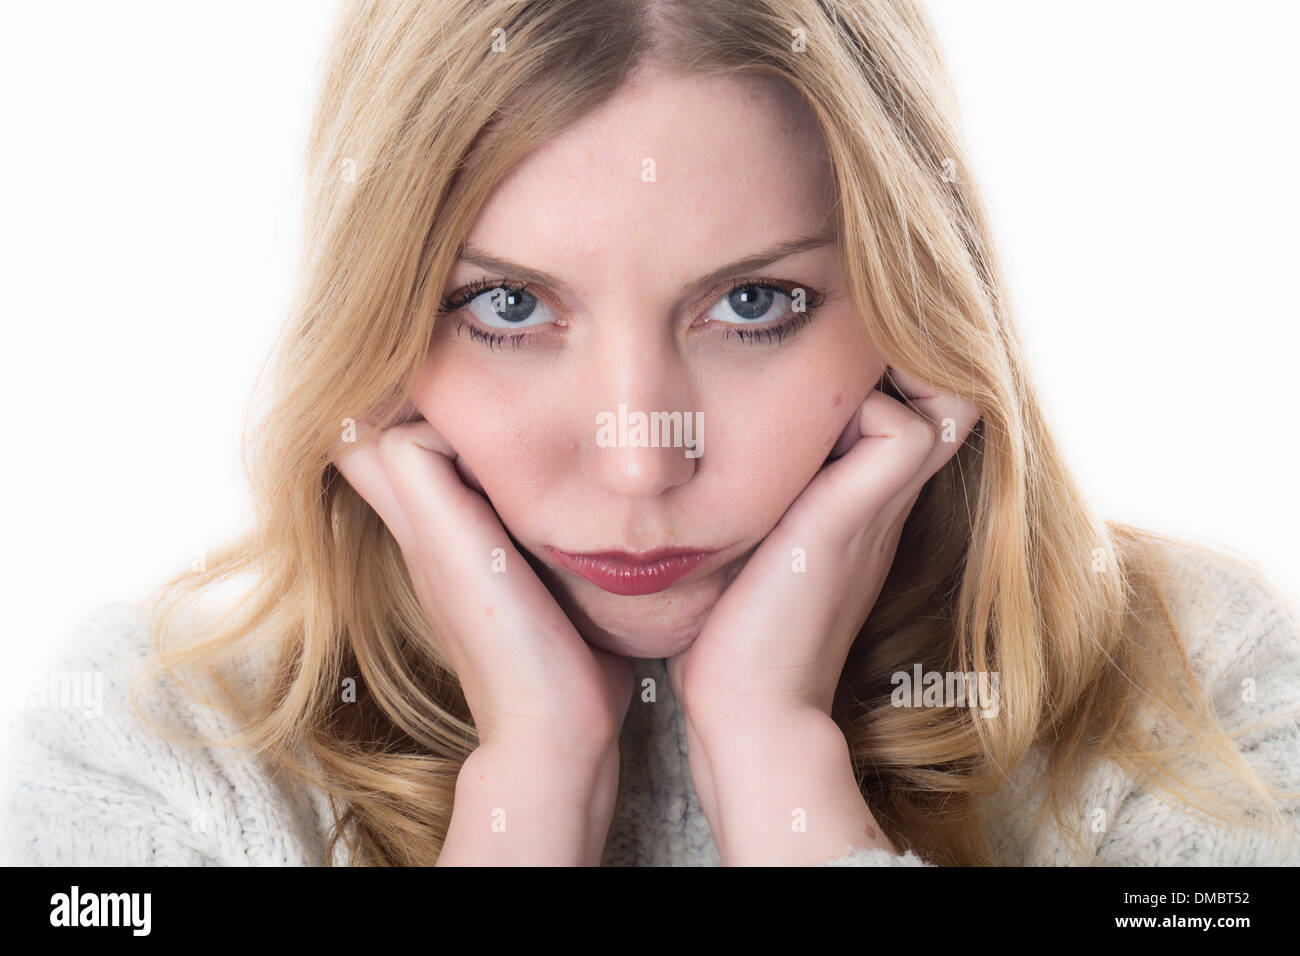 Model Released. Sad Grumpy Young Woman Stock Photo